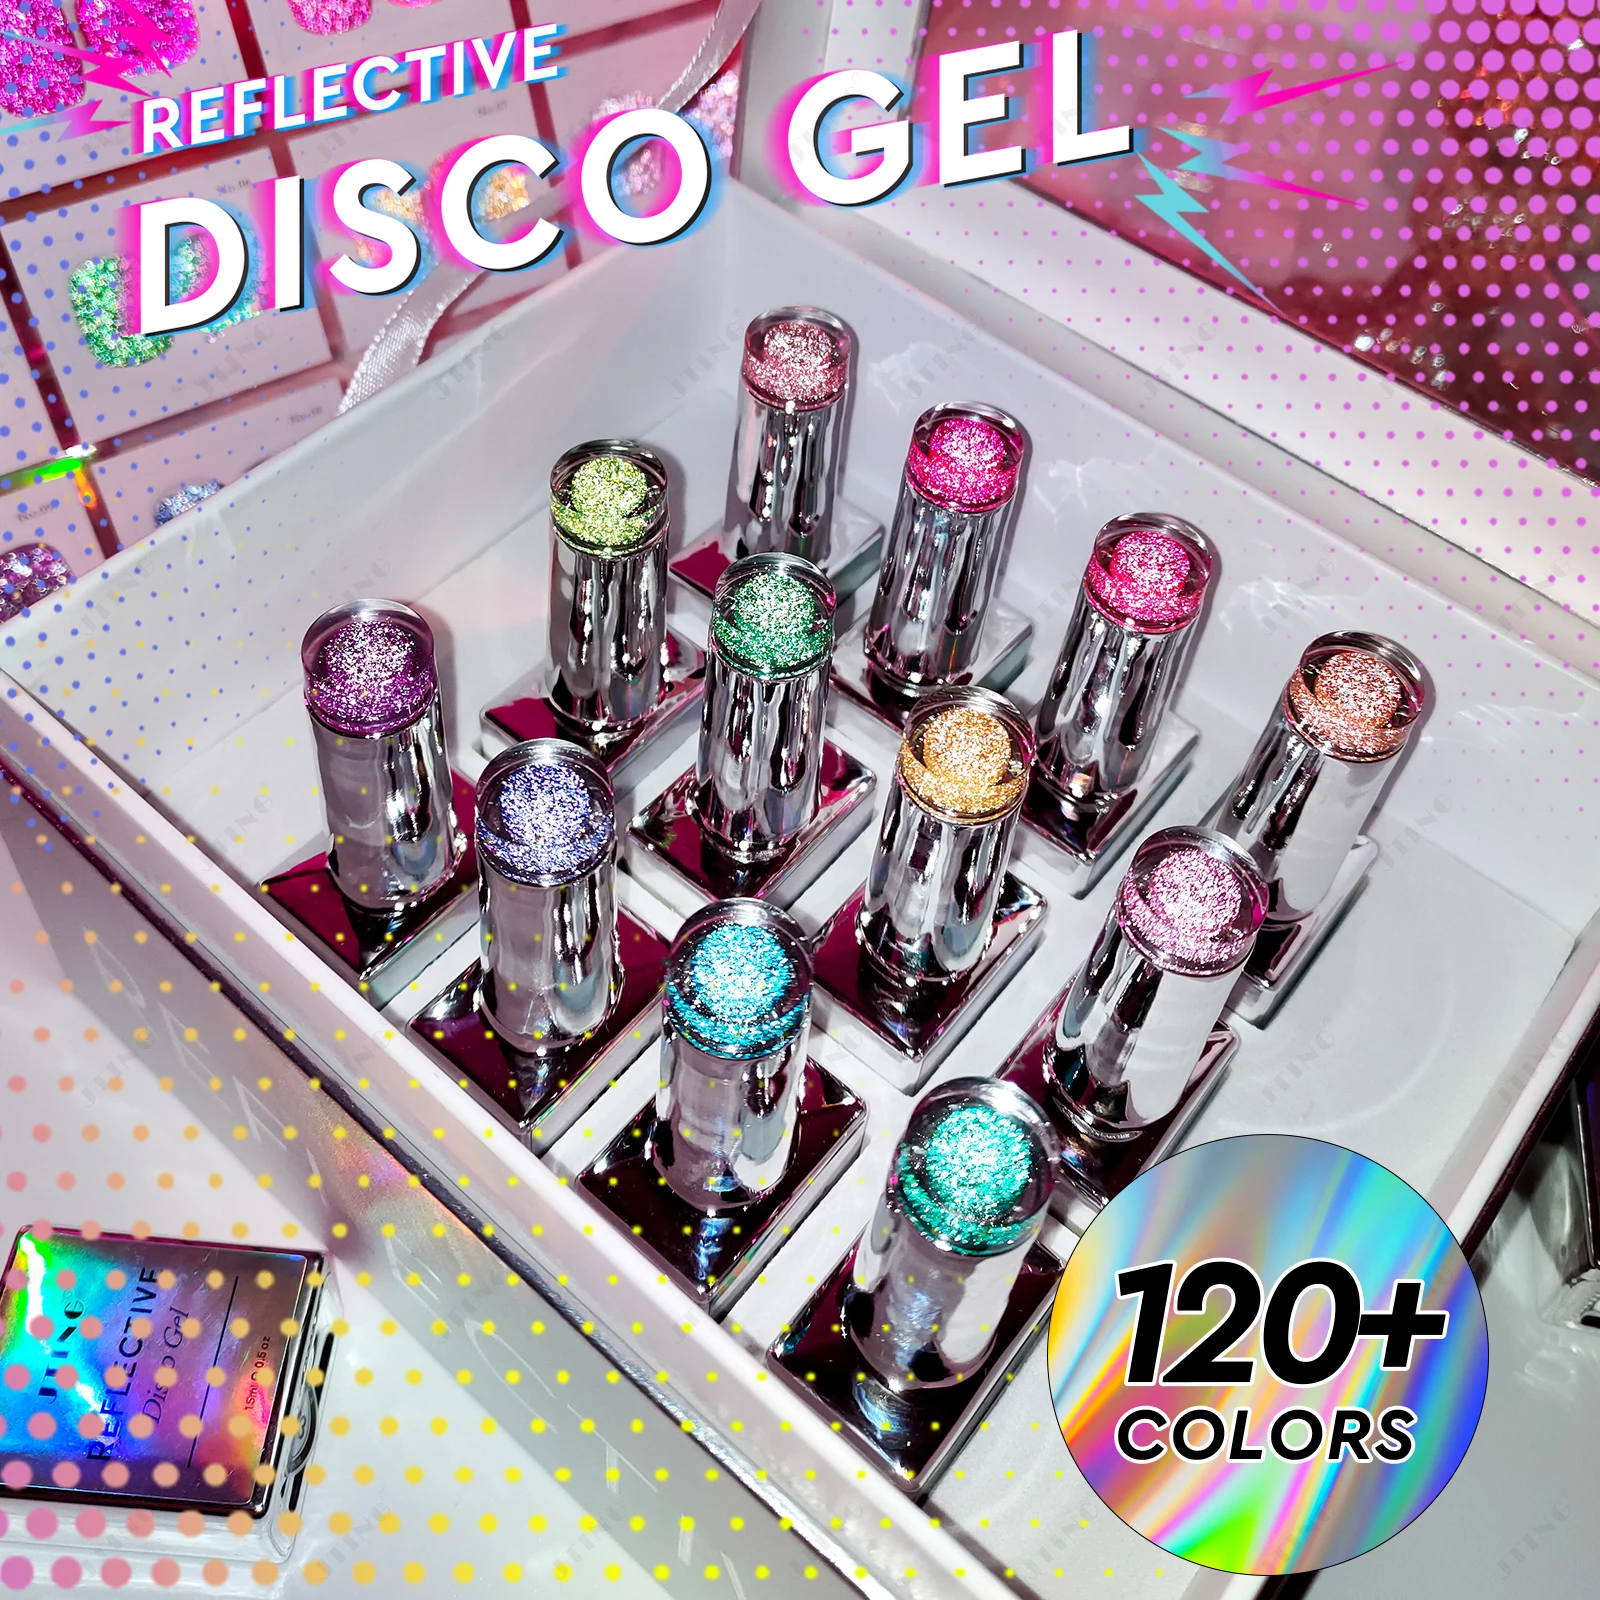 

JTING Festival Hot Sale 12colors reflective disco gel polish collection Unique Laser set box OEM gel nail polish supplies